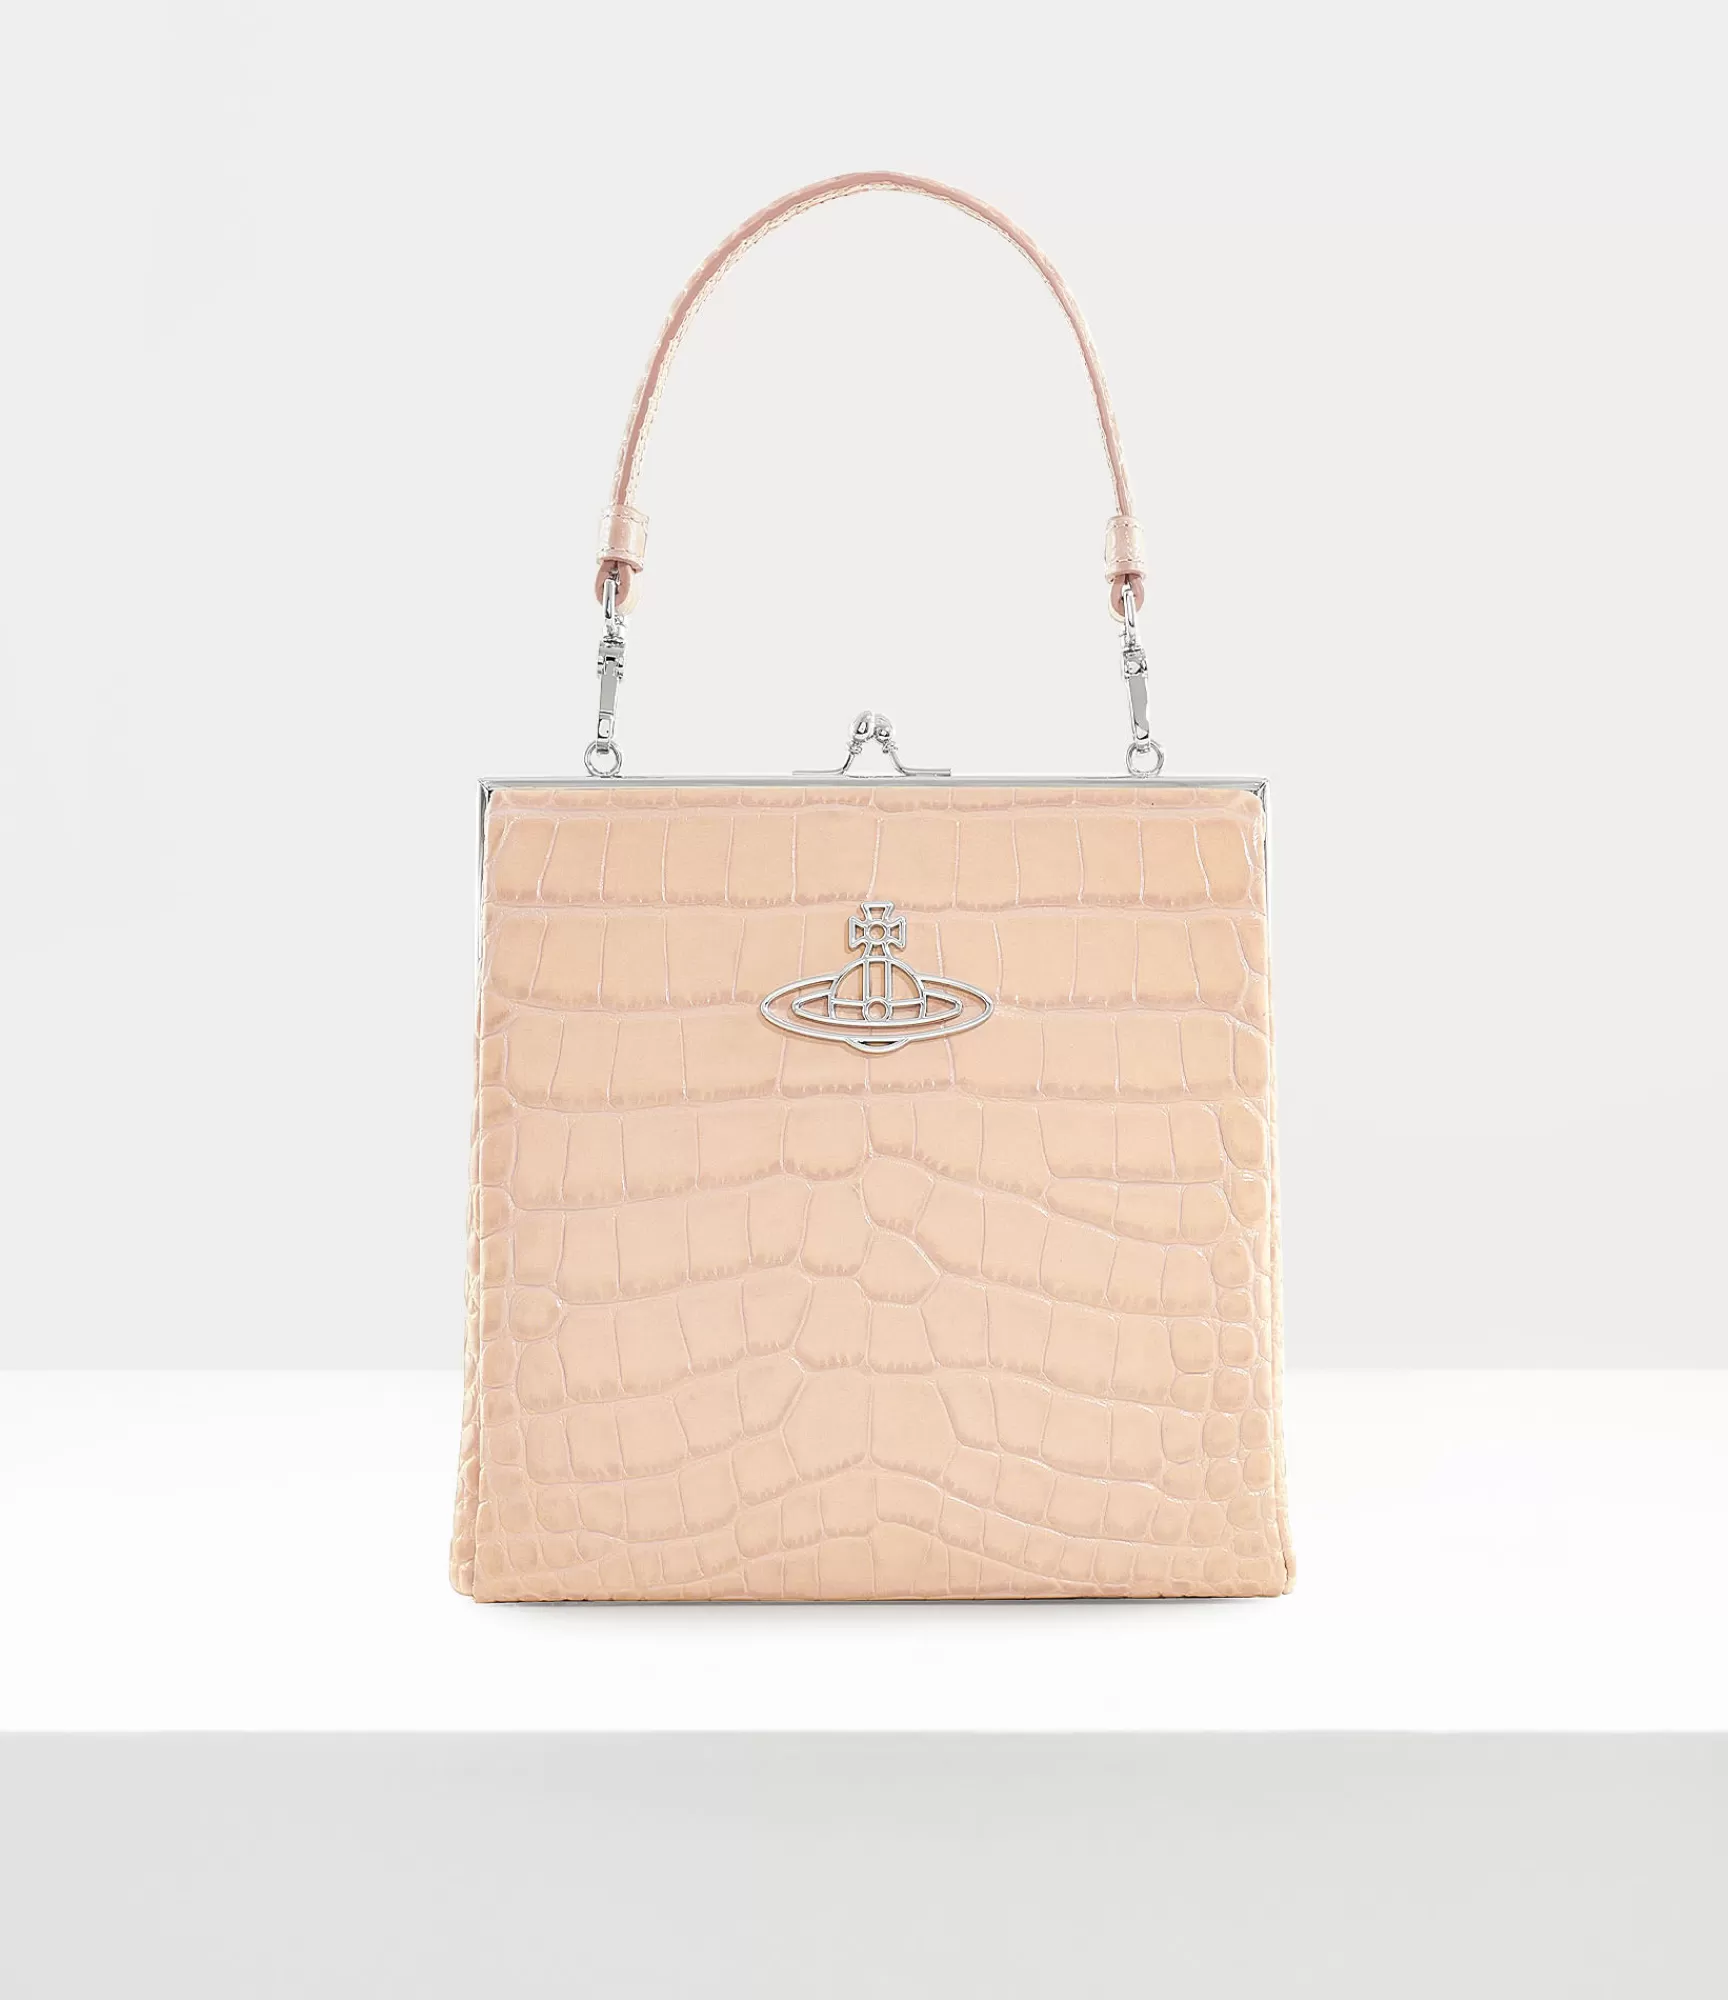 Vivienne Westwood Handbags*Square frame purse Cream